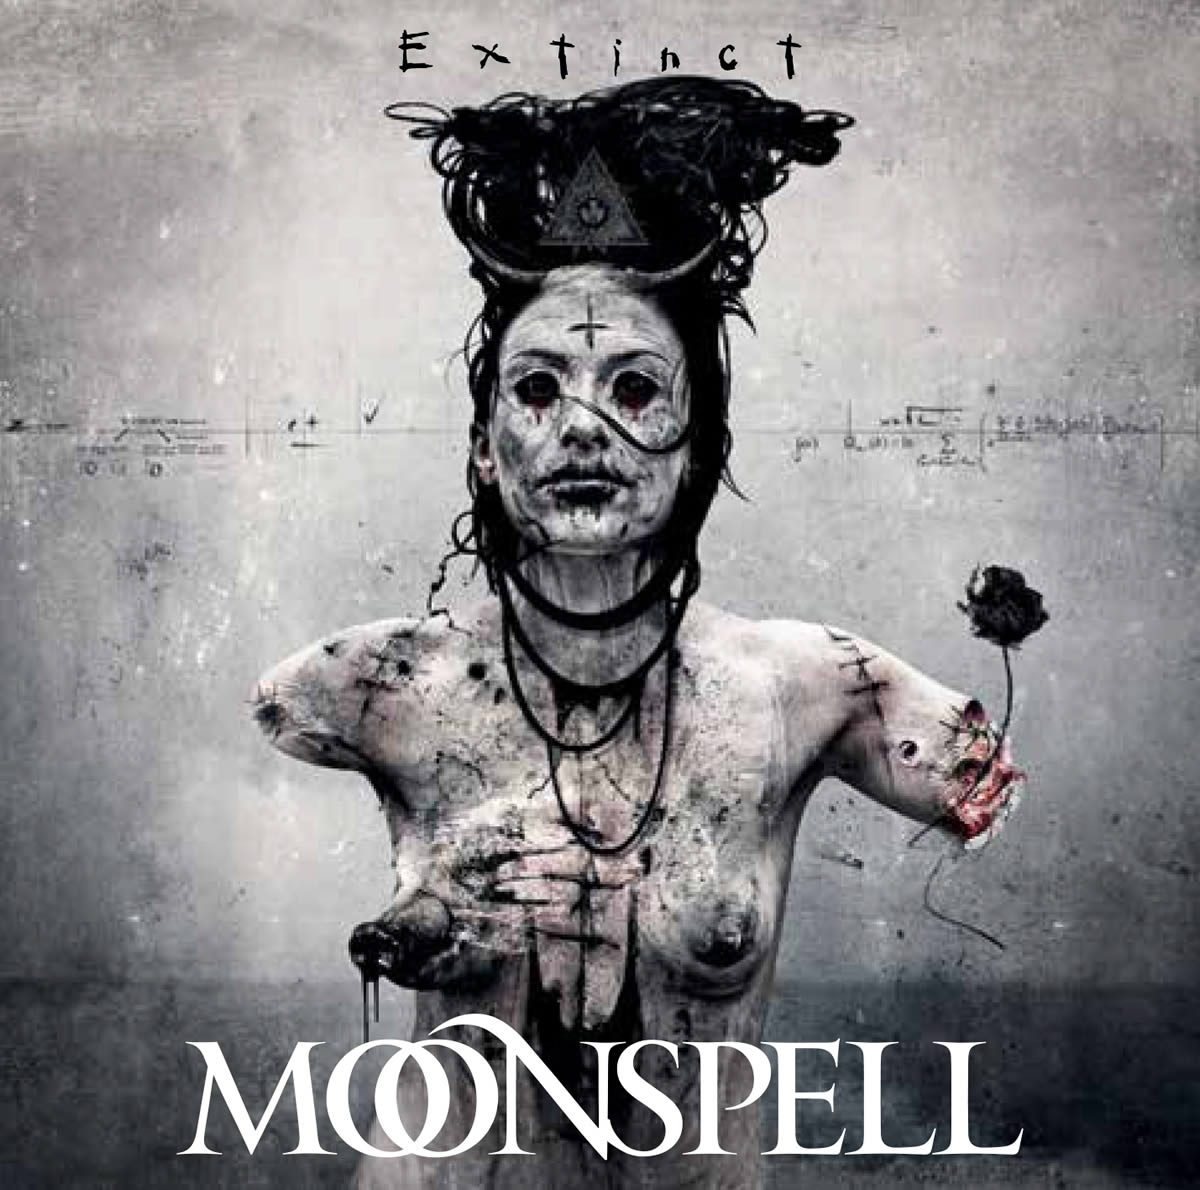 [nota de imprensa] Moonspell – “Extinct” (CD/Napalm Records)